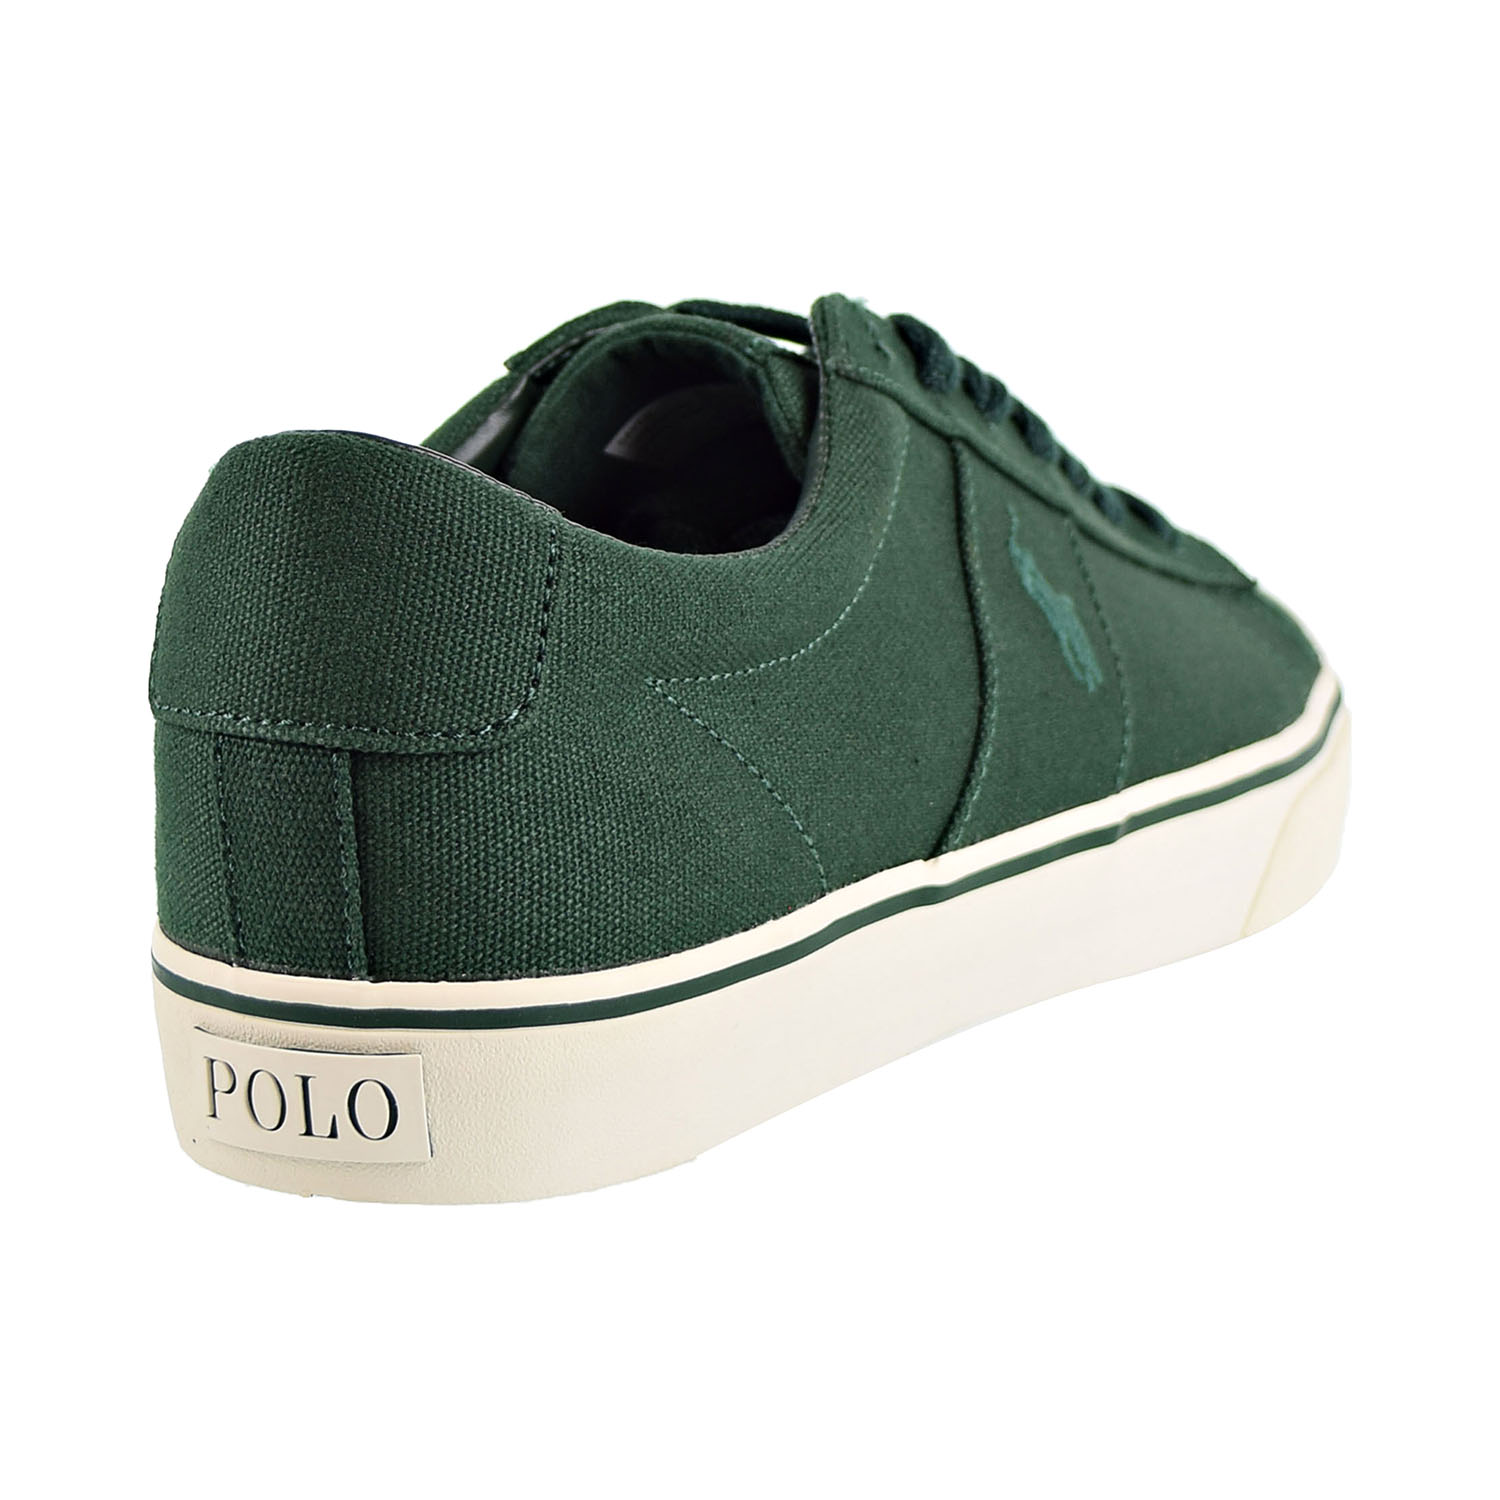 Polo Ralph Lauren Sayer Men's Shoes Green 816710017-002 - image 3 of 6